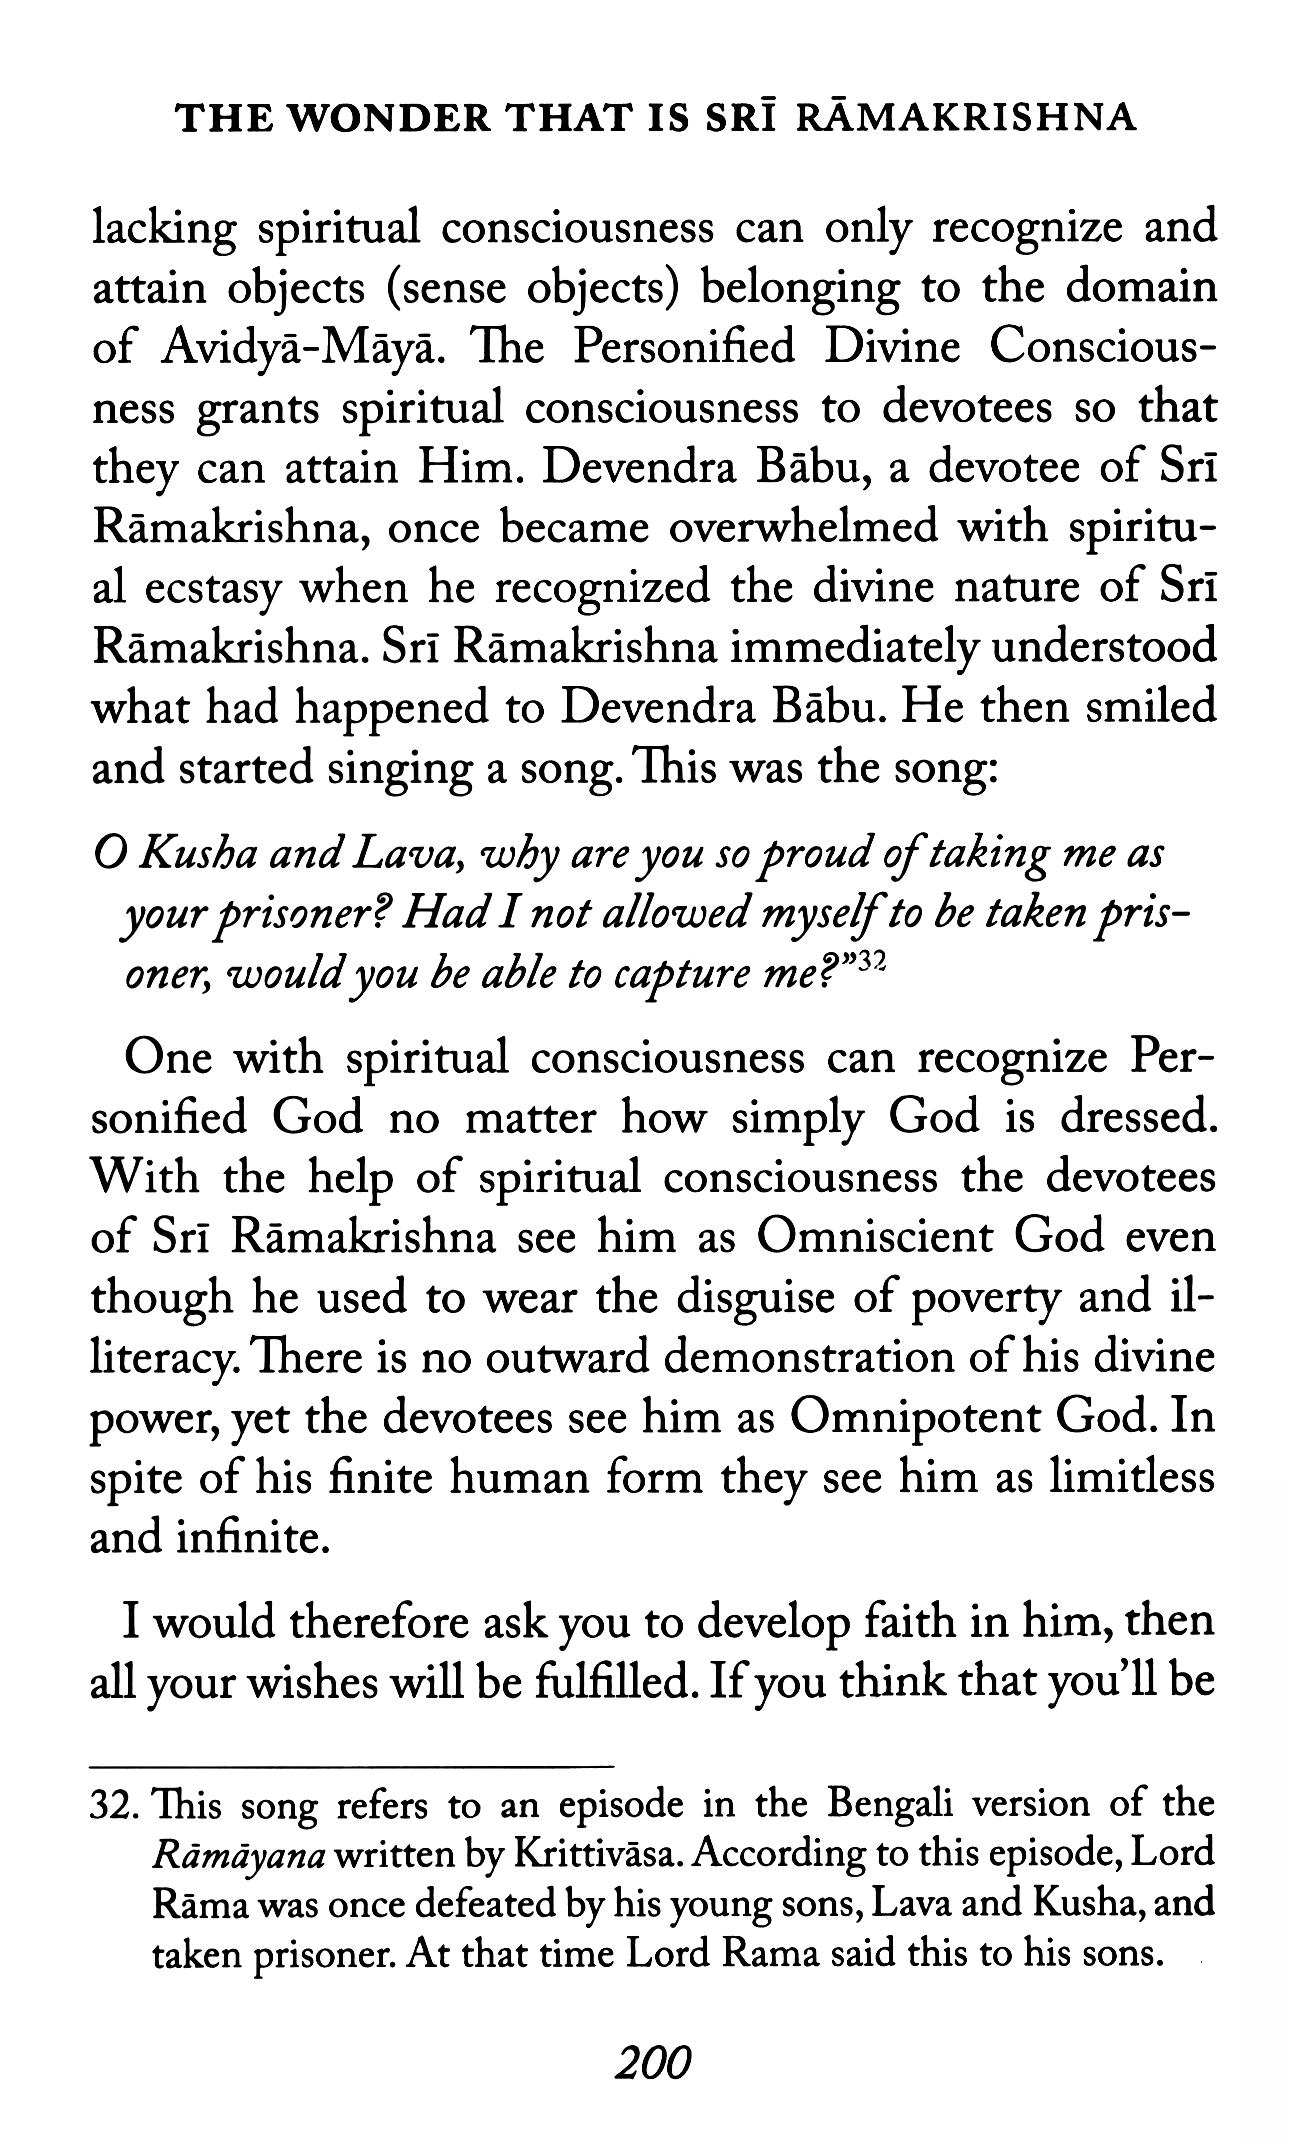 The Wonder That is Sri Ramakrishna